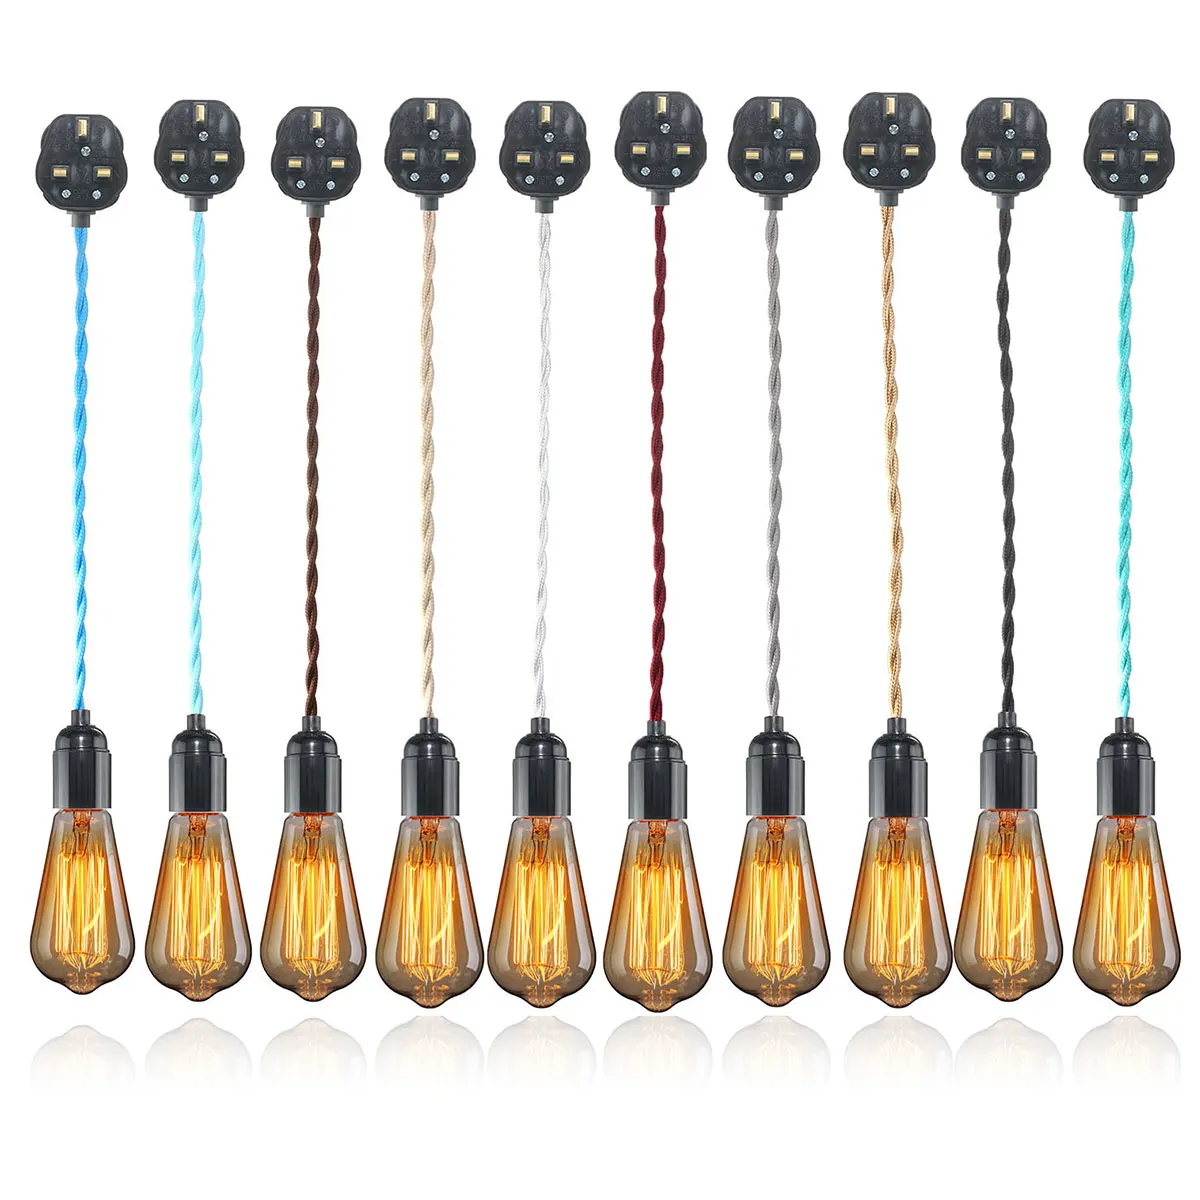 

2M E27 Vintage Twisted Fabric Cable UK Plug In Pendant Lamp Light Bulb Holder Socket Lamp Bases